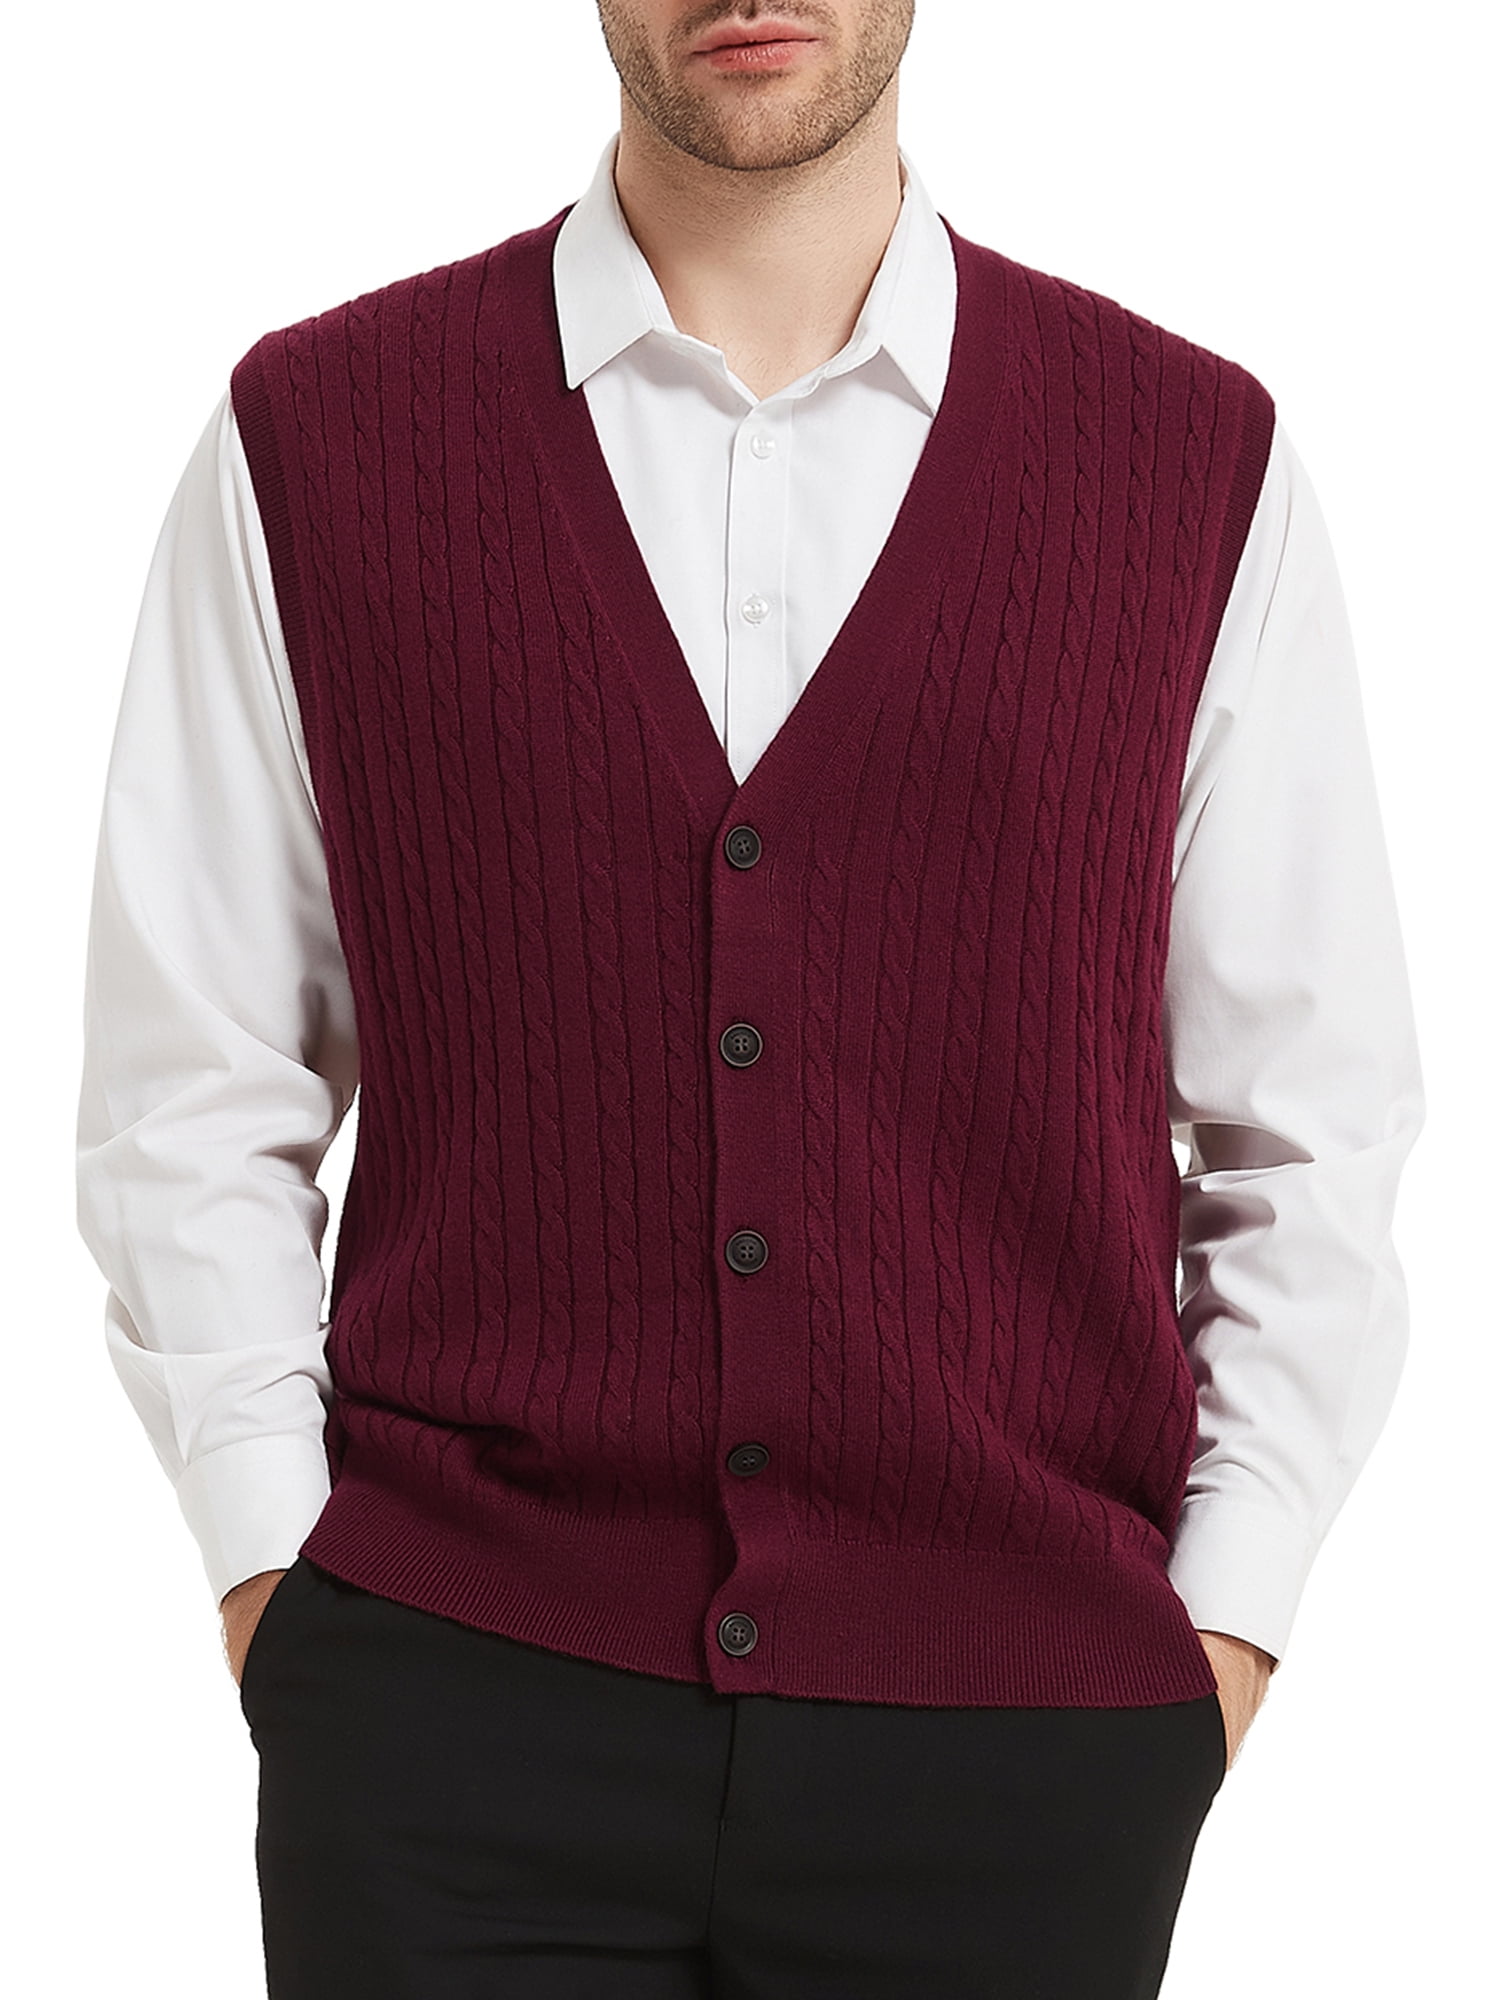 Kallspin Men's Cashmere Wool Blend Cable Knit V Sleeveless Cardigan Vest Sweater(Black,3X-Large) - Walmart.com